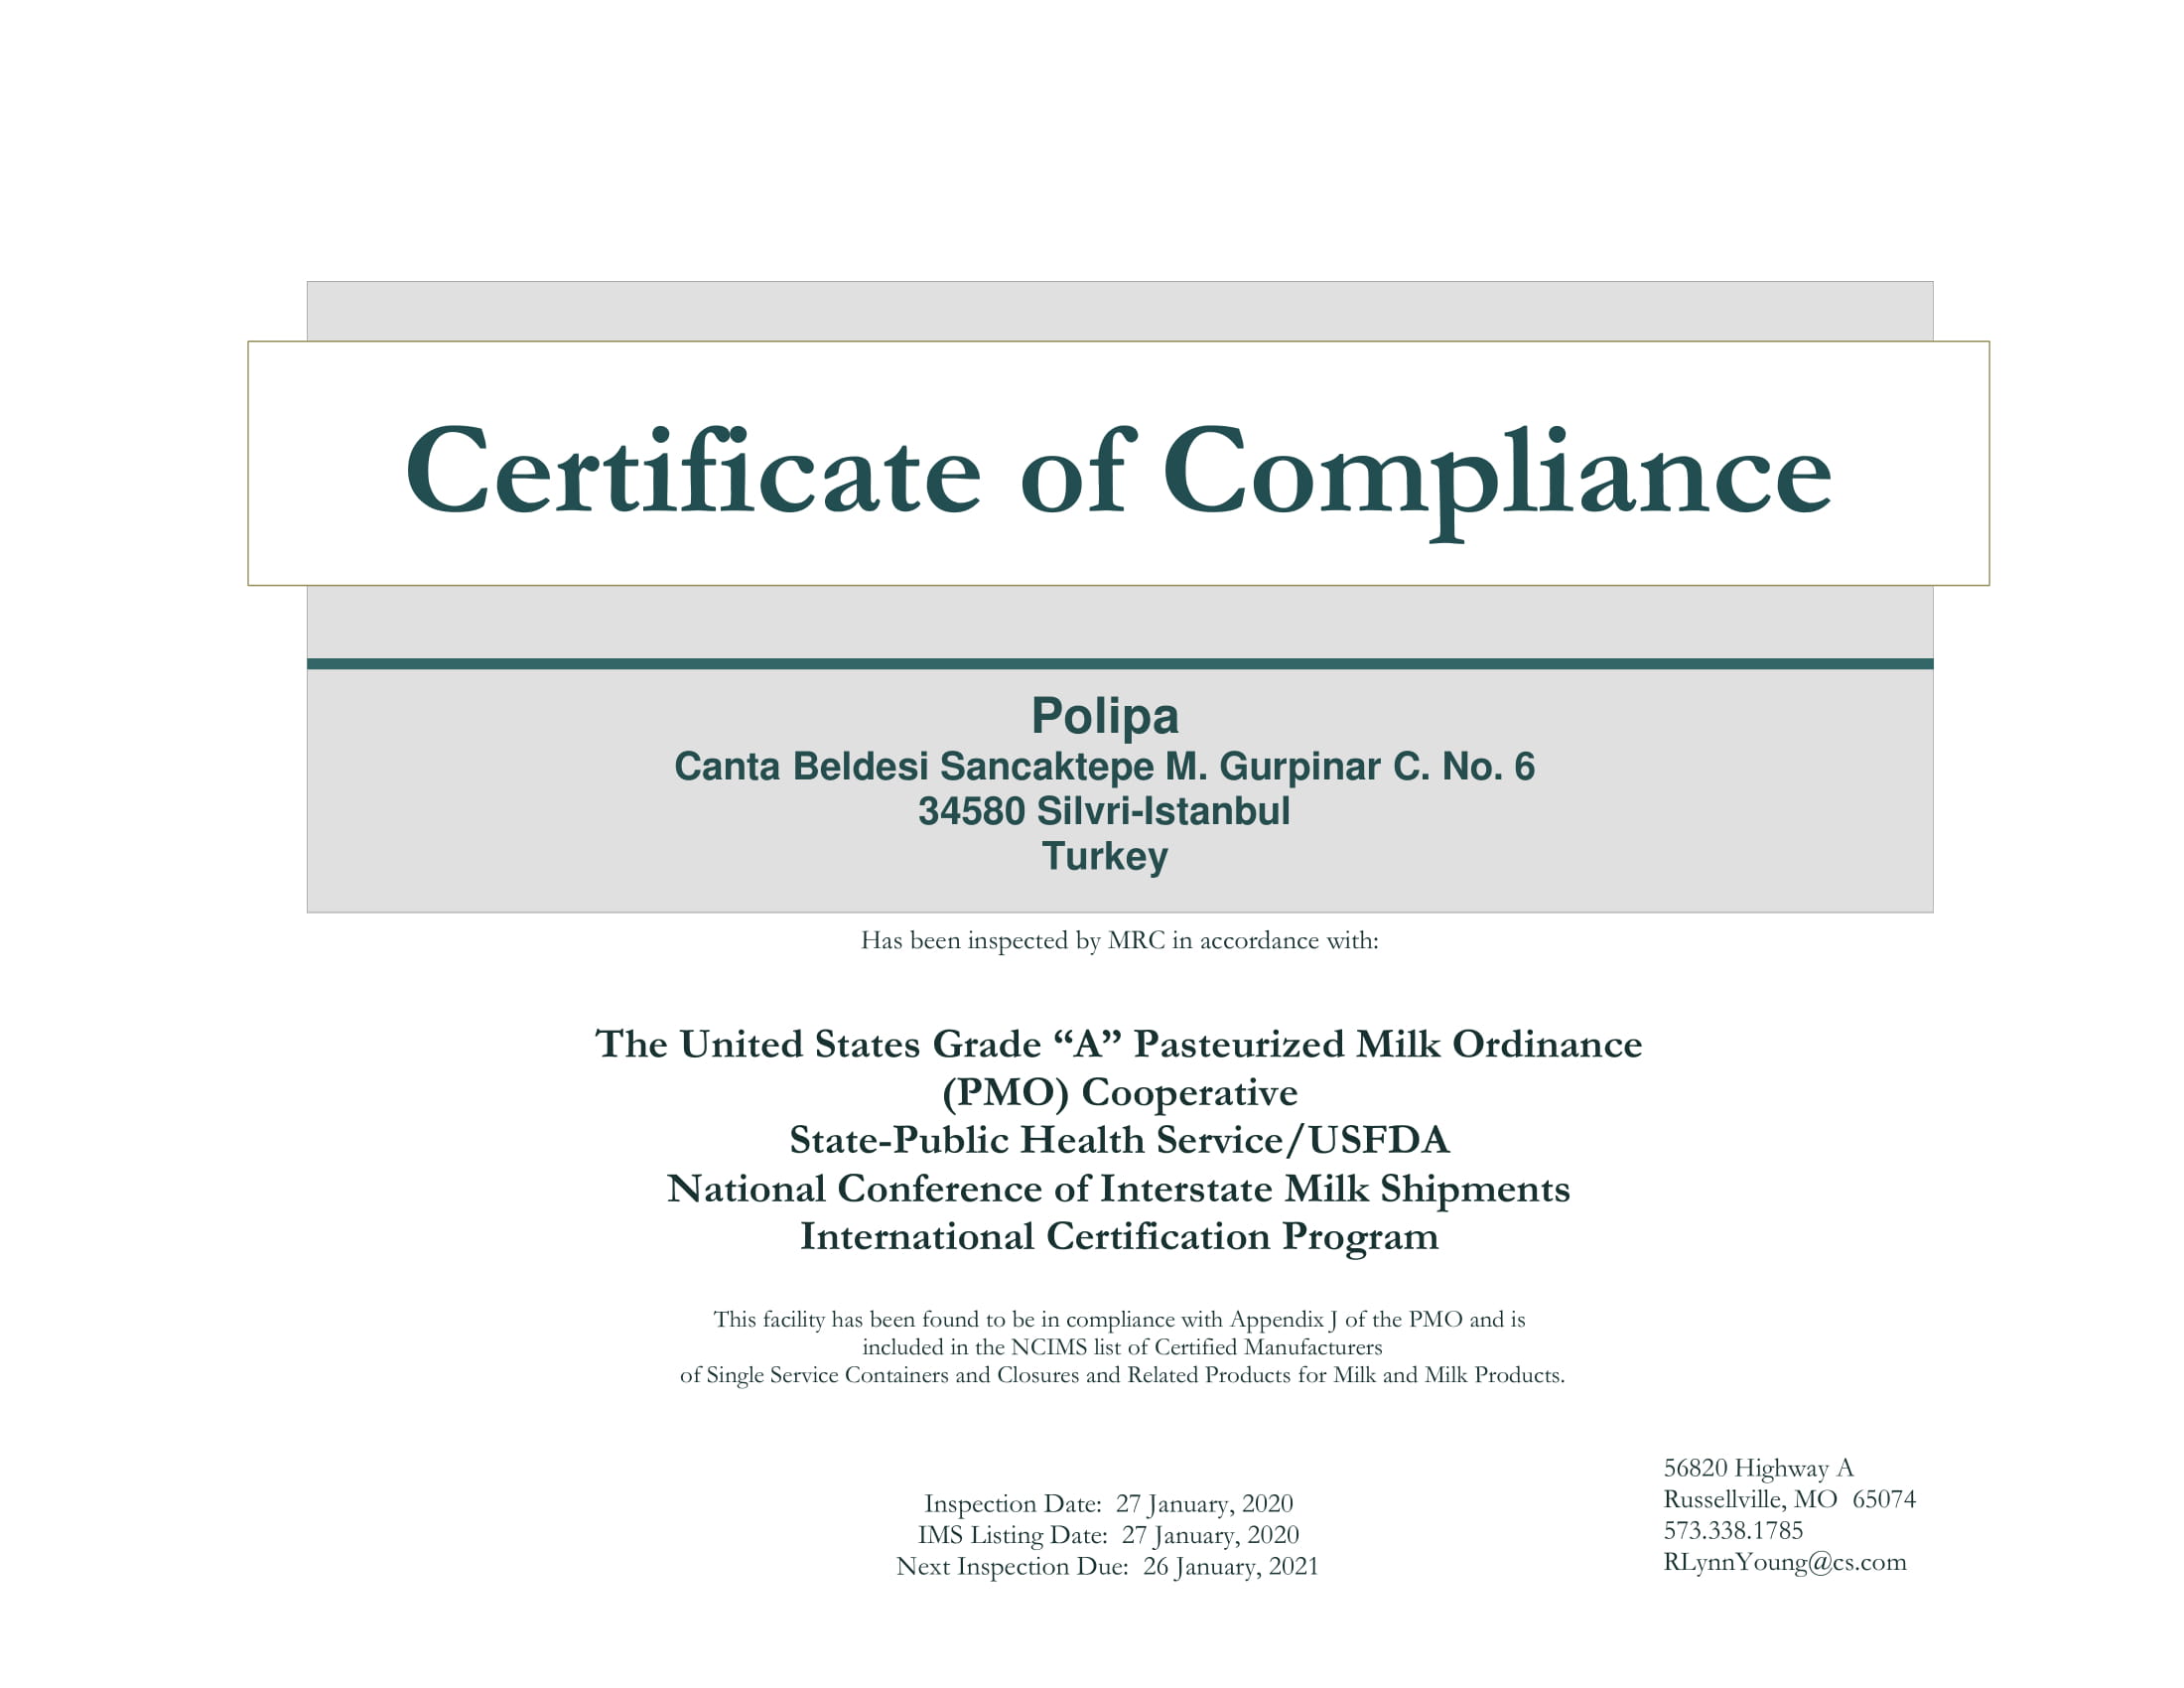 FDA Certificate of Inspection 012720-1